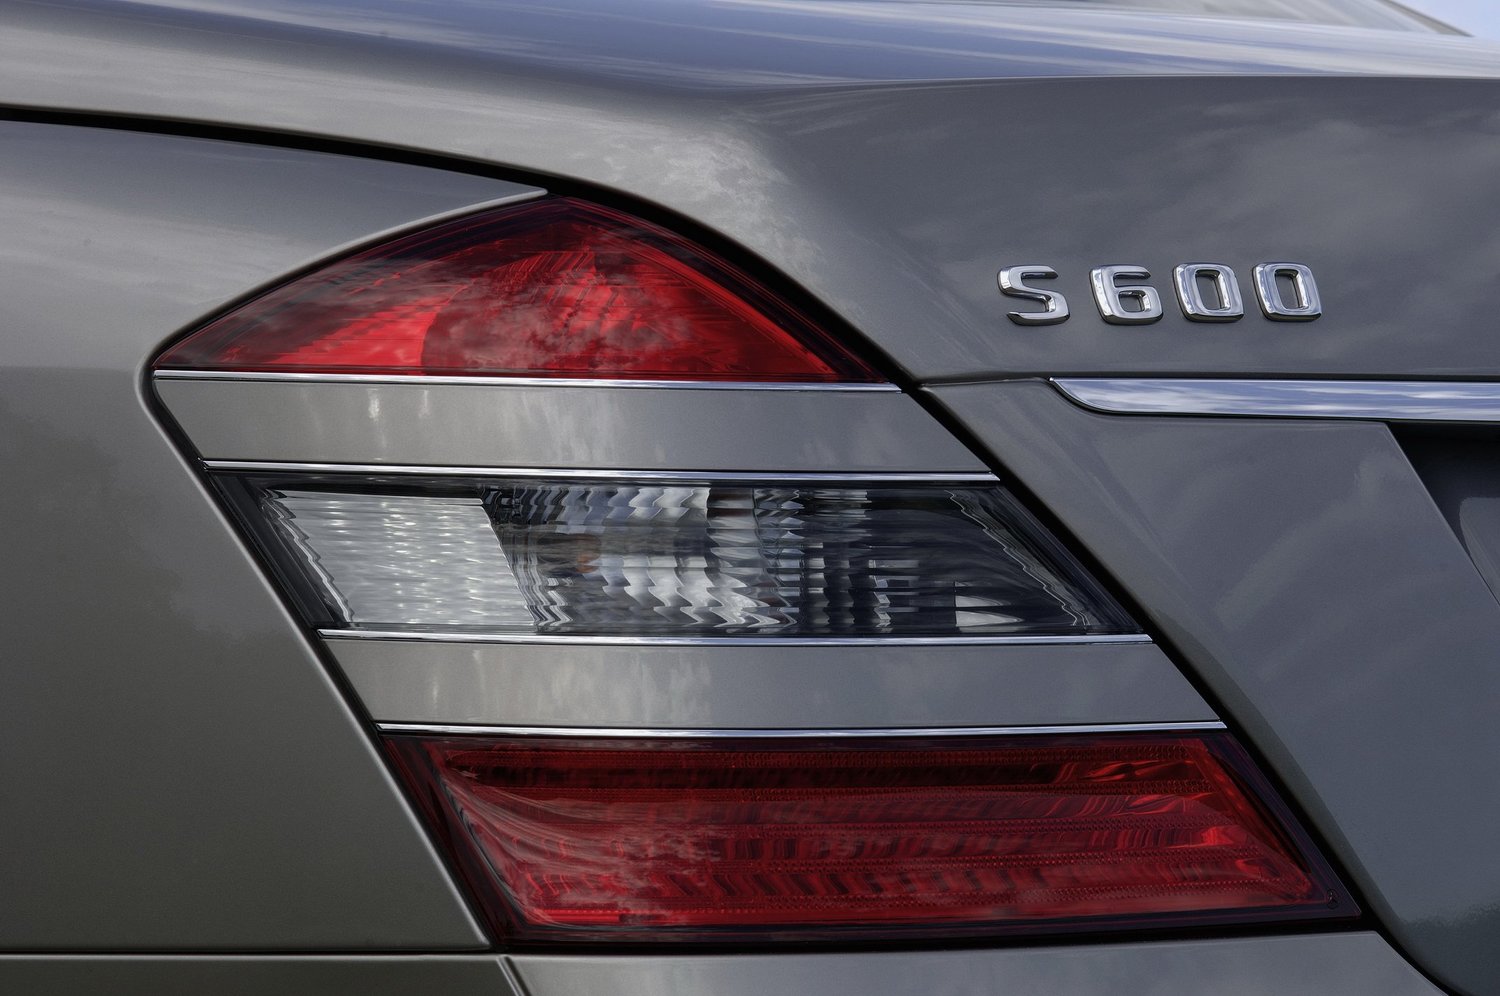 седан Long Mercedes-Benz S-klasse 2005 - 2009г выпуска модификация S 350 4MATIC Long 3.5 AT (272 л.с.) 4×4